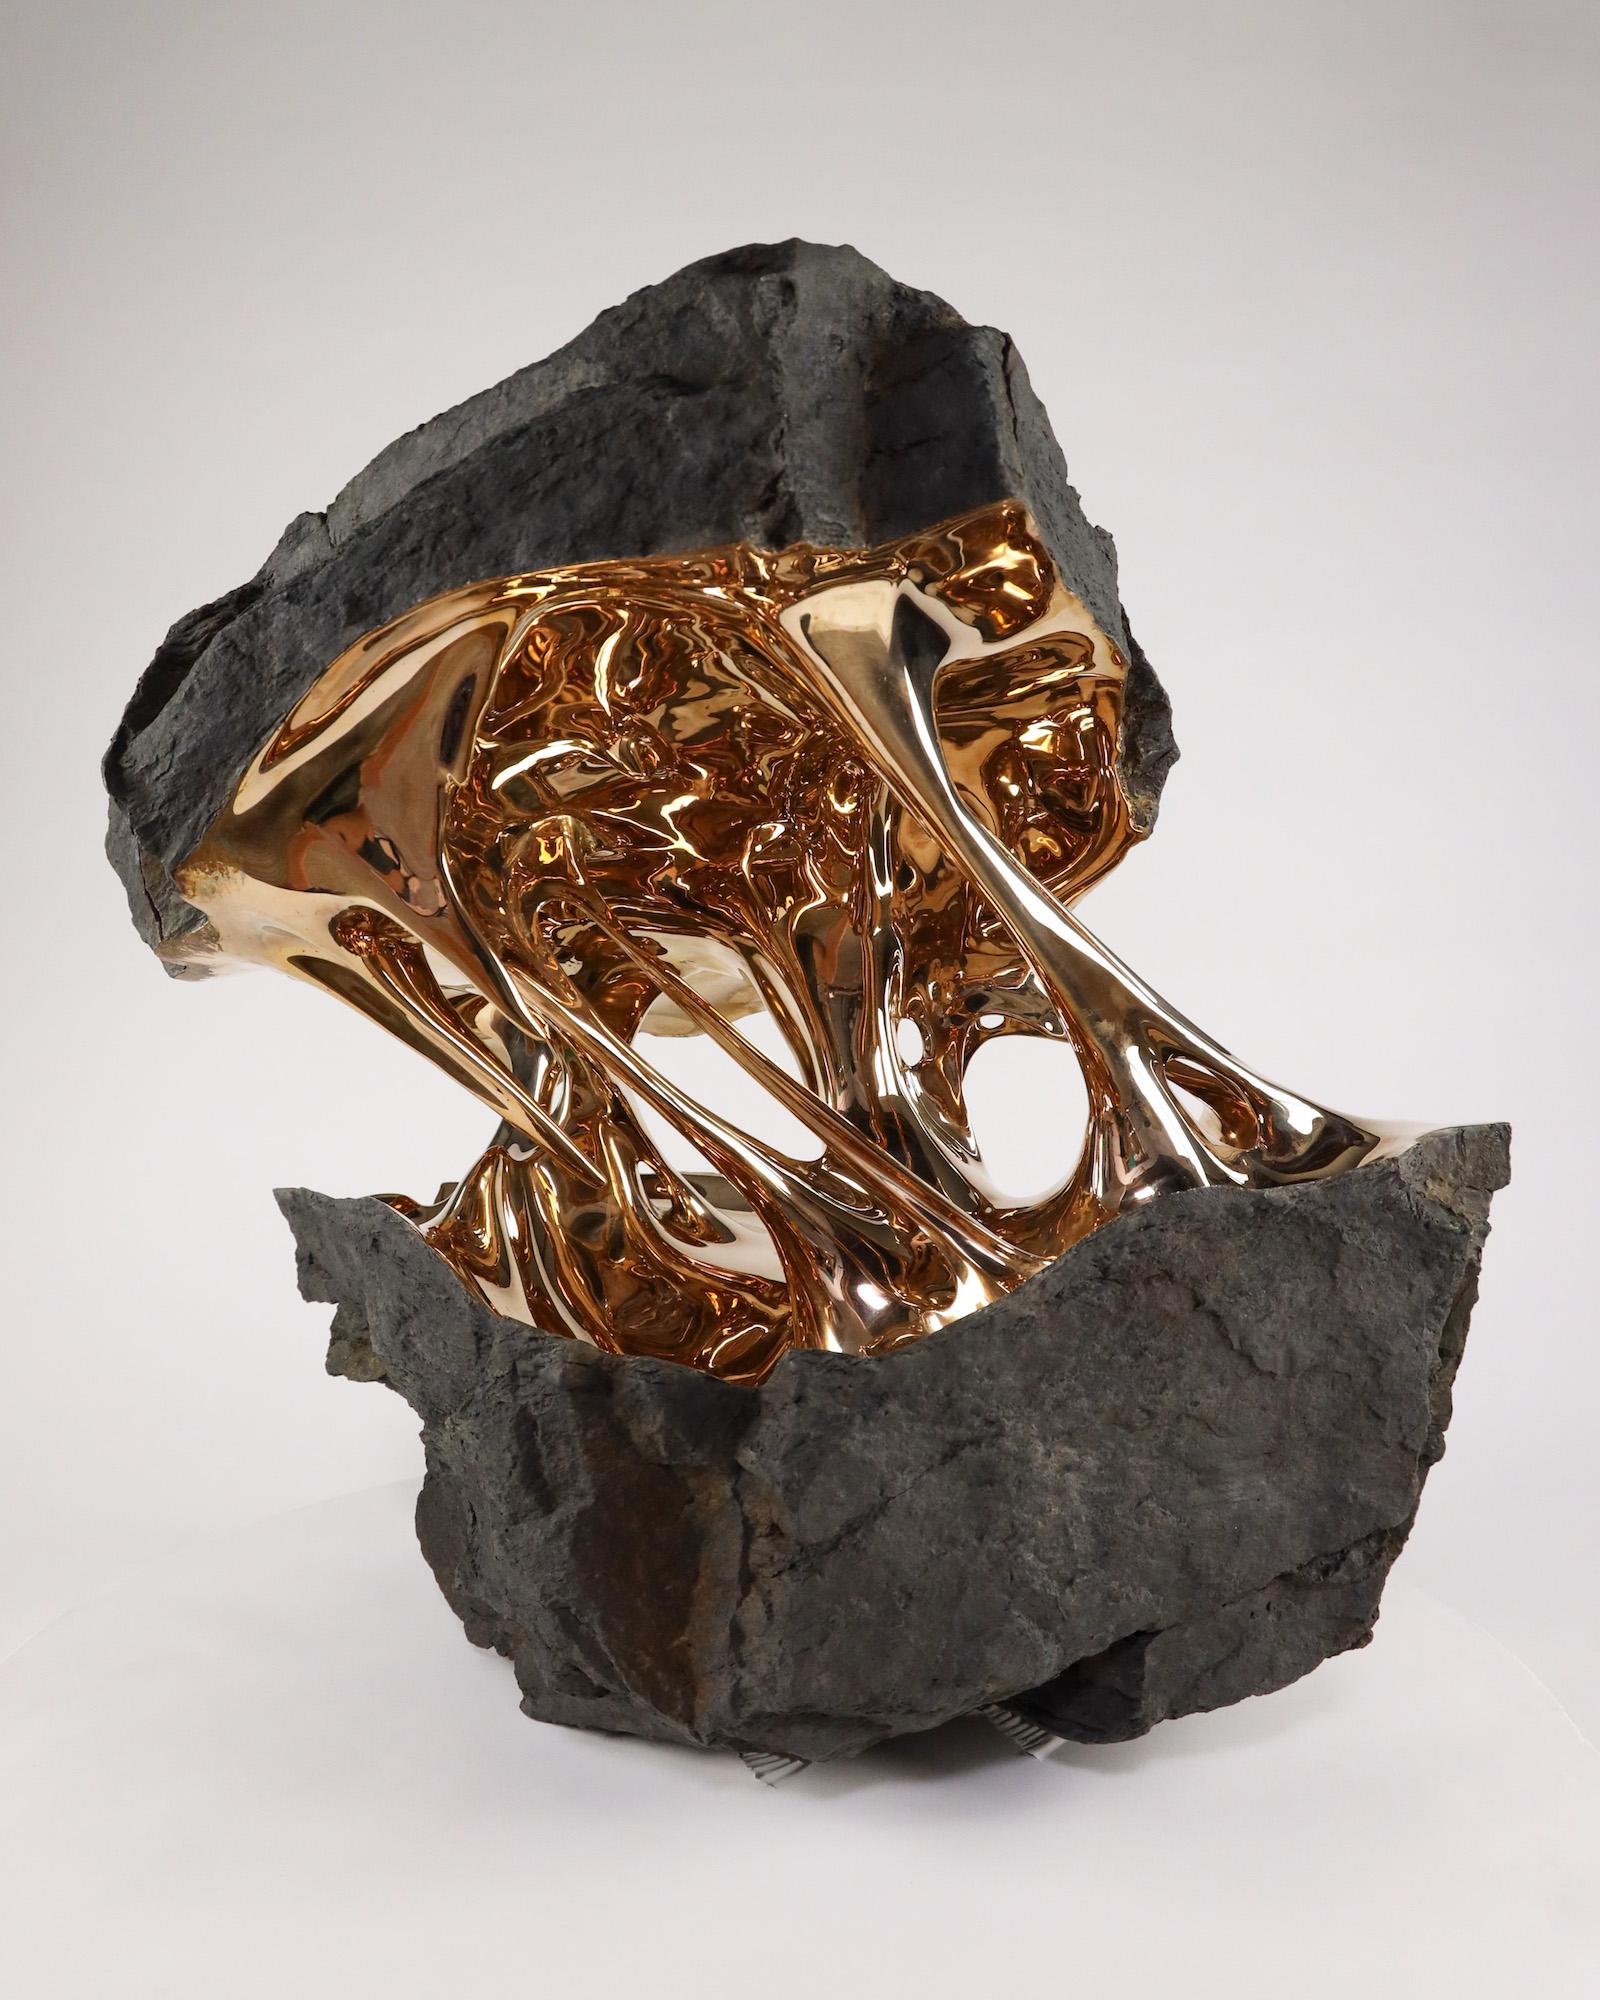 Gaïa by Romain Langlois - Rock-like bronze sculpture, golden, abstract For Sale 5